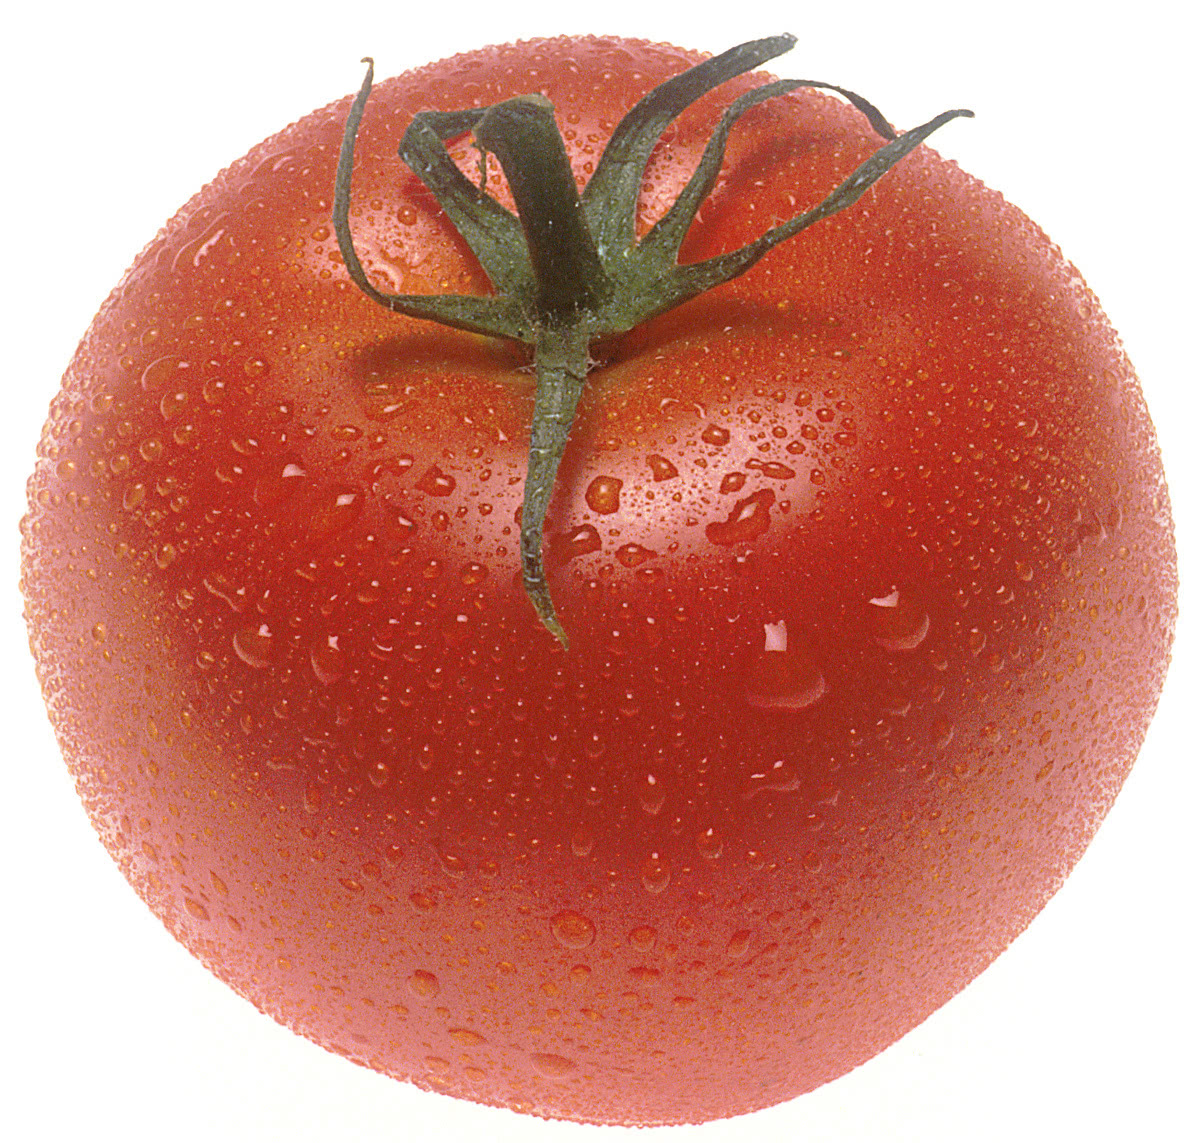 tomato ripe large